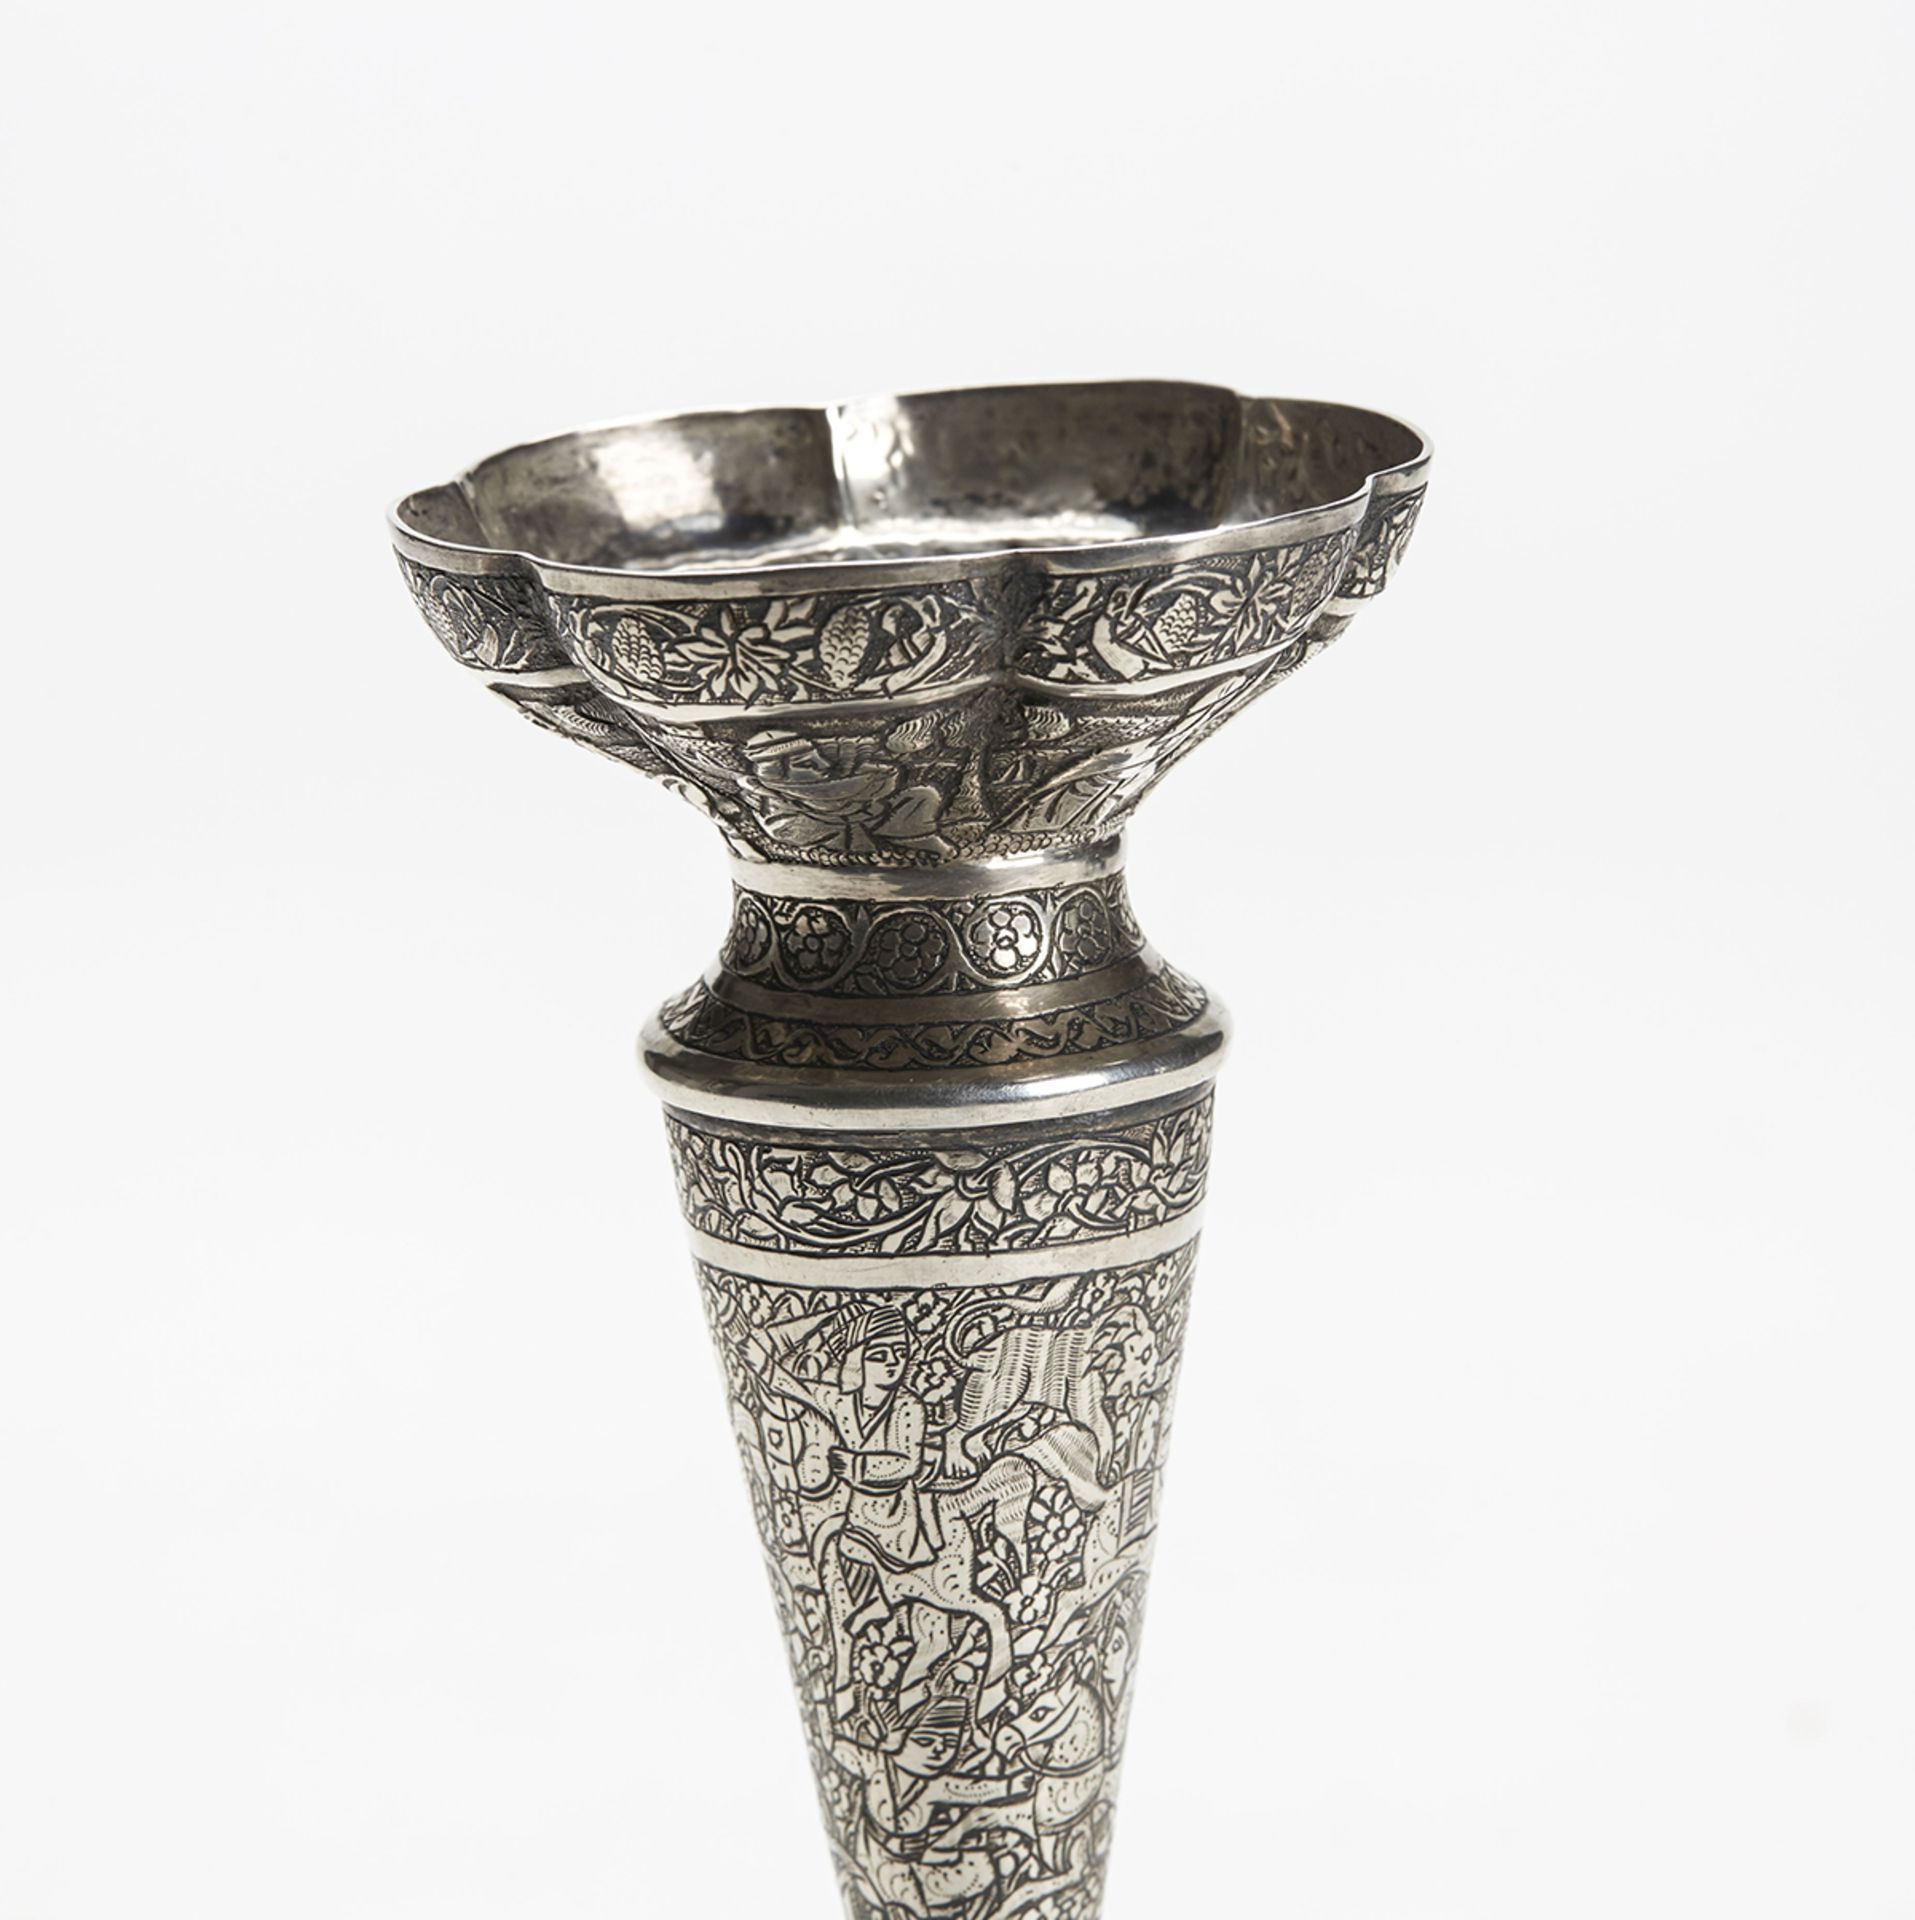 Antique Indian/Asian Silver Figural Vase 19Th C.